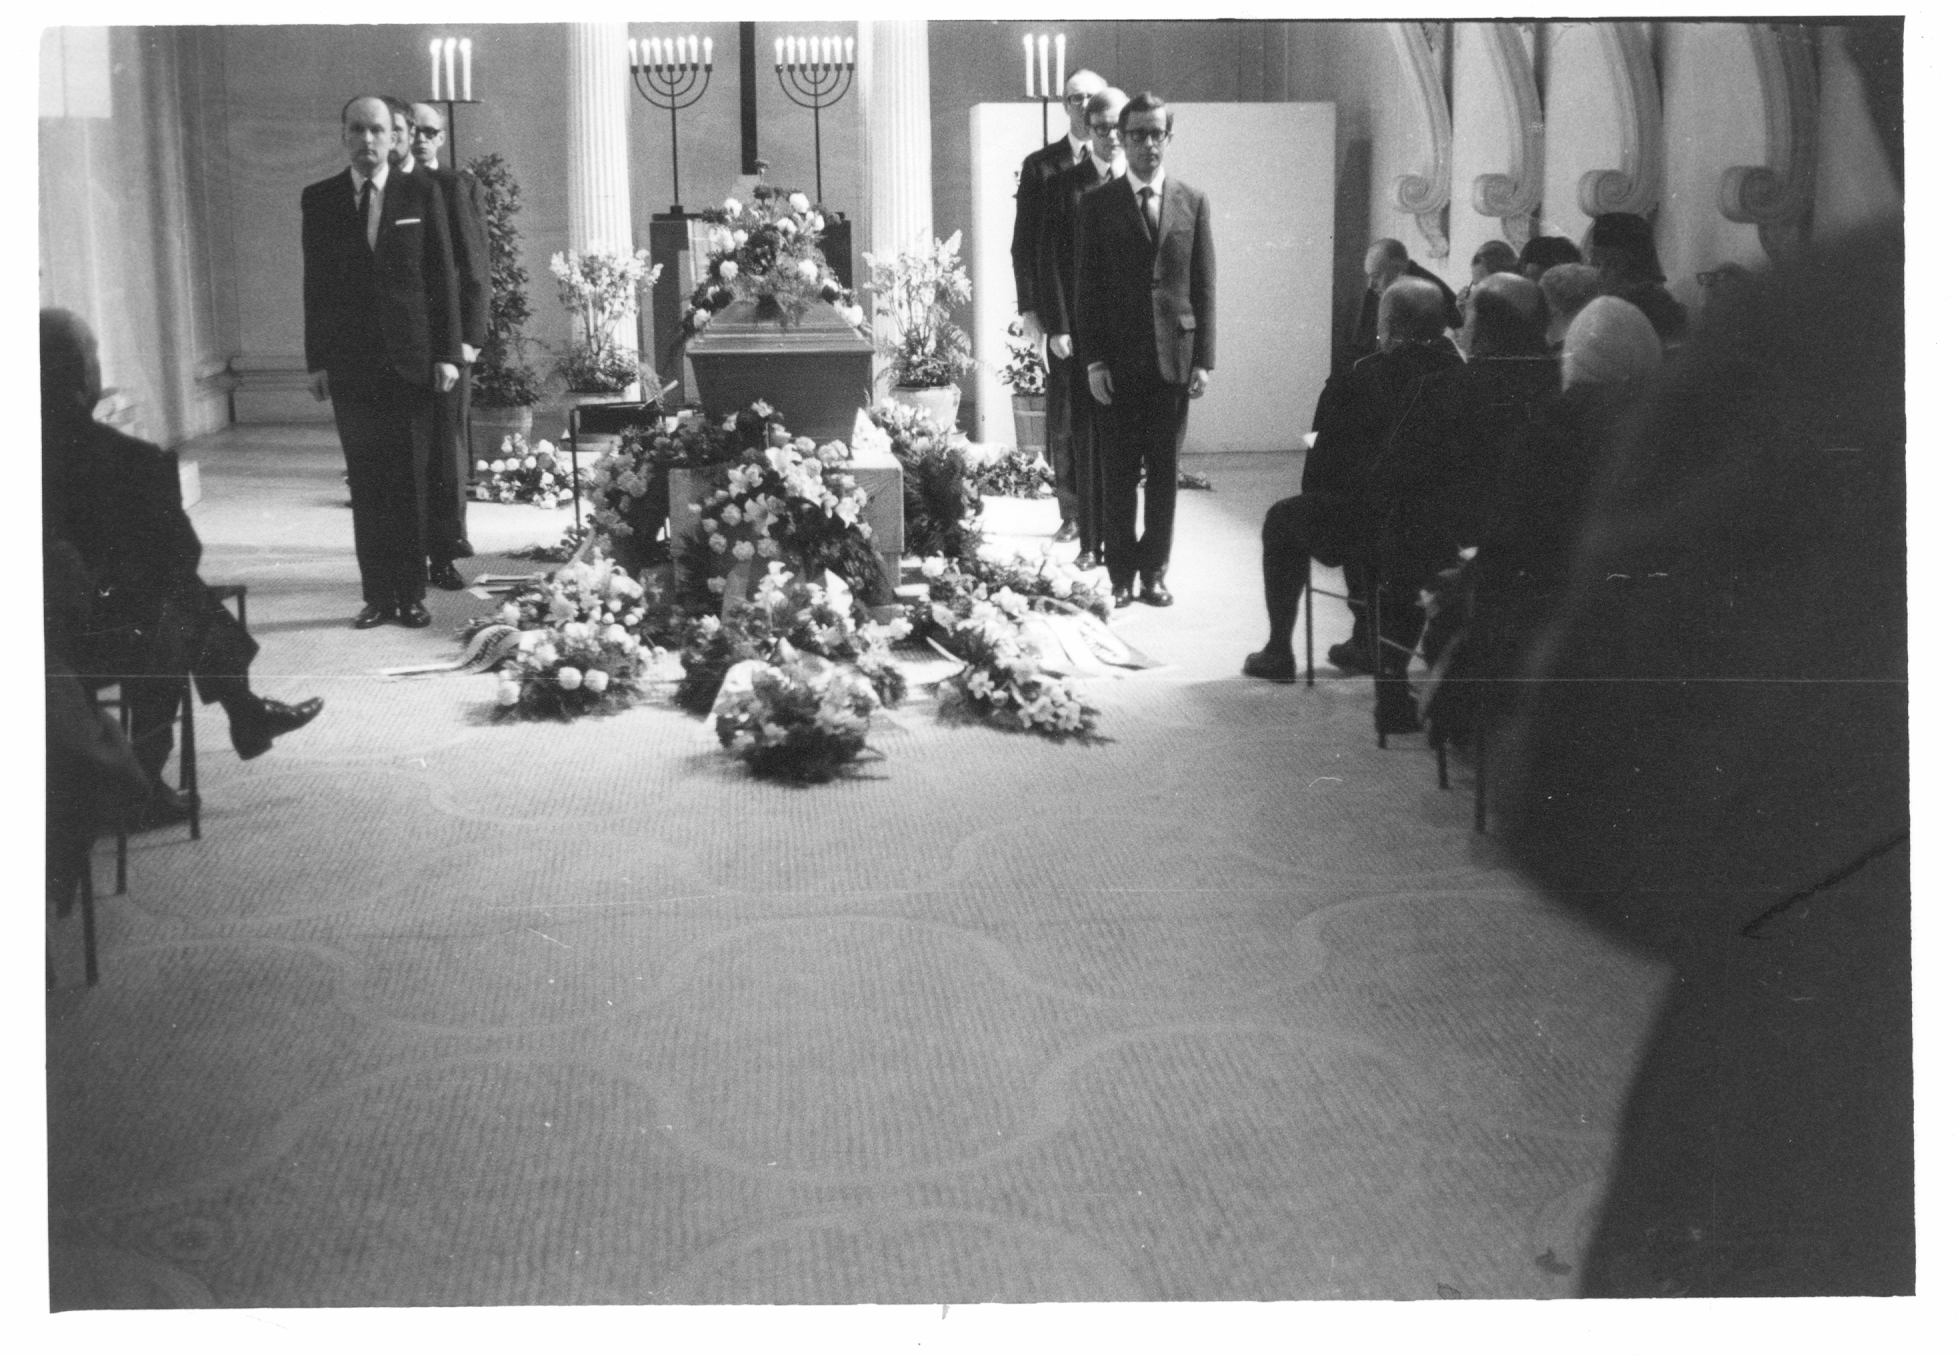 The funeral of John Aaviku